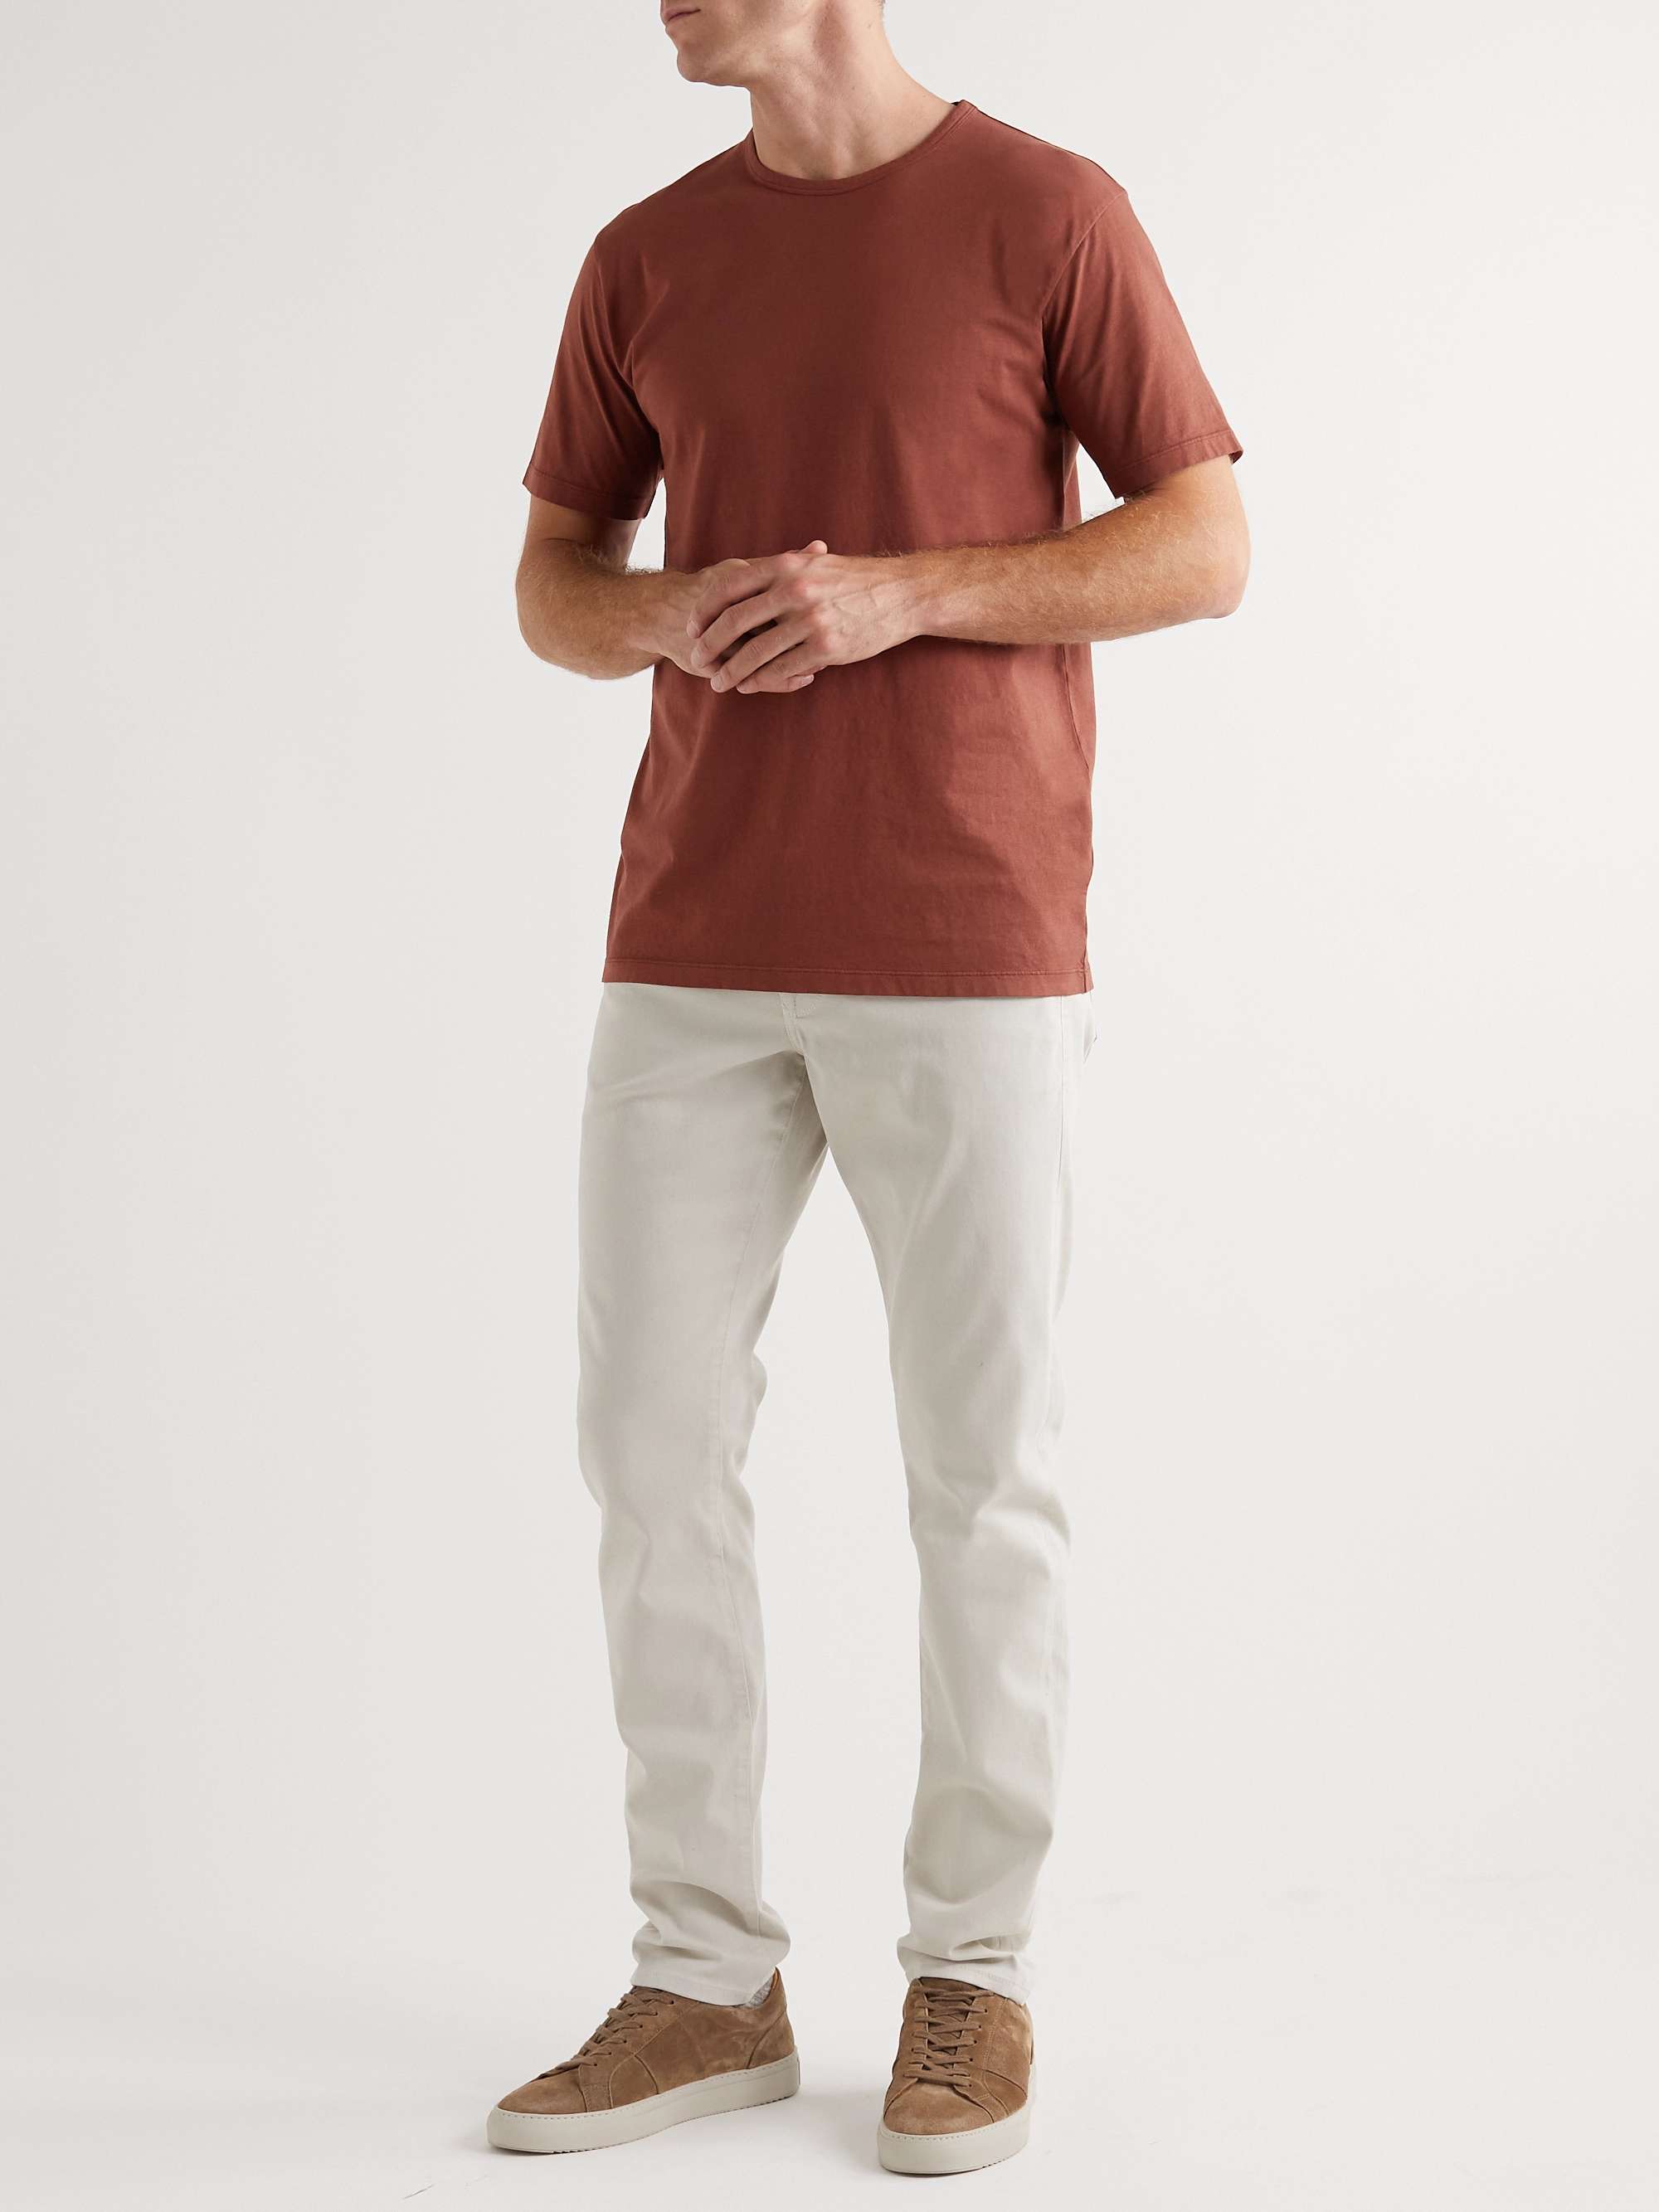 MR P. Garment-Dyed Cotton-Jersey T-Shirt